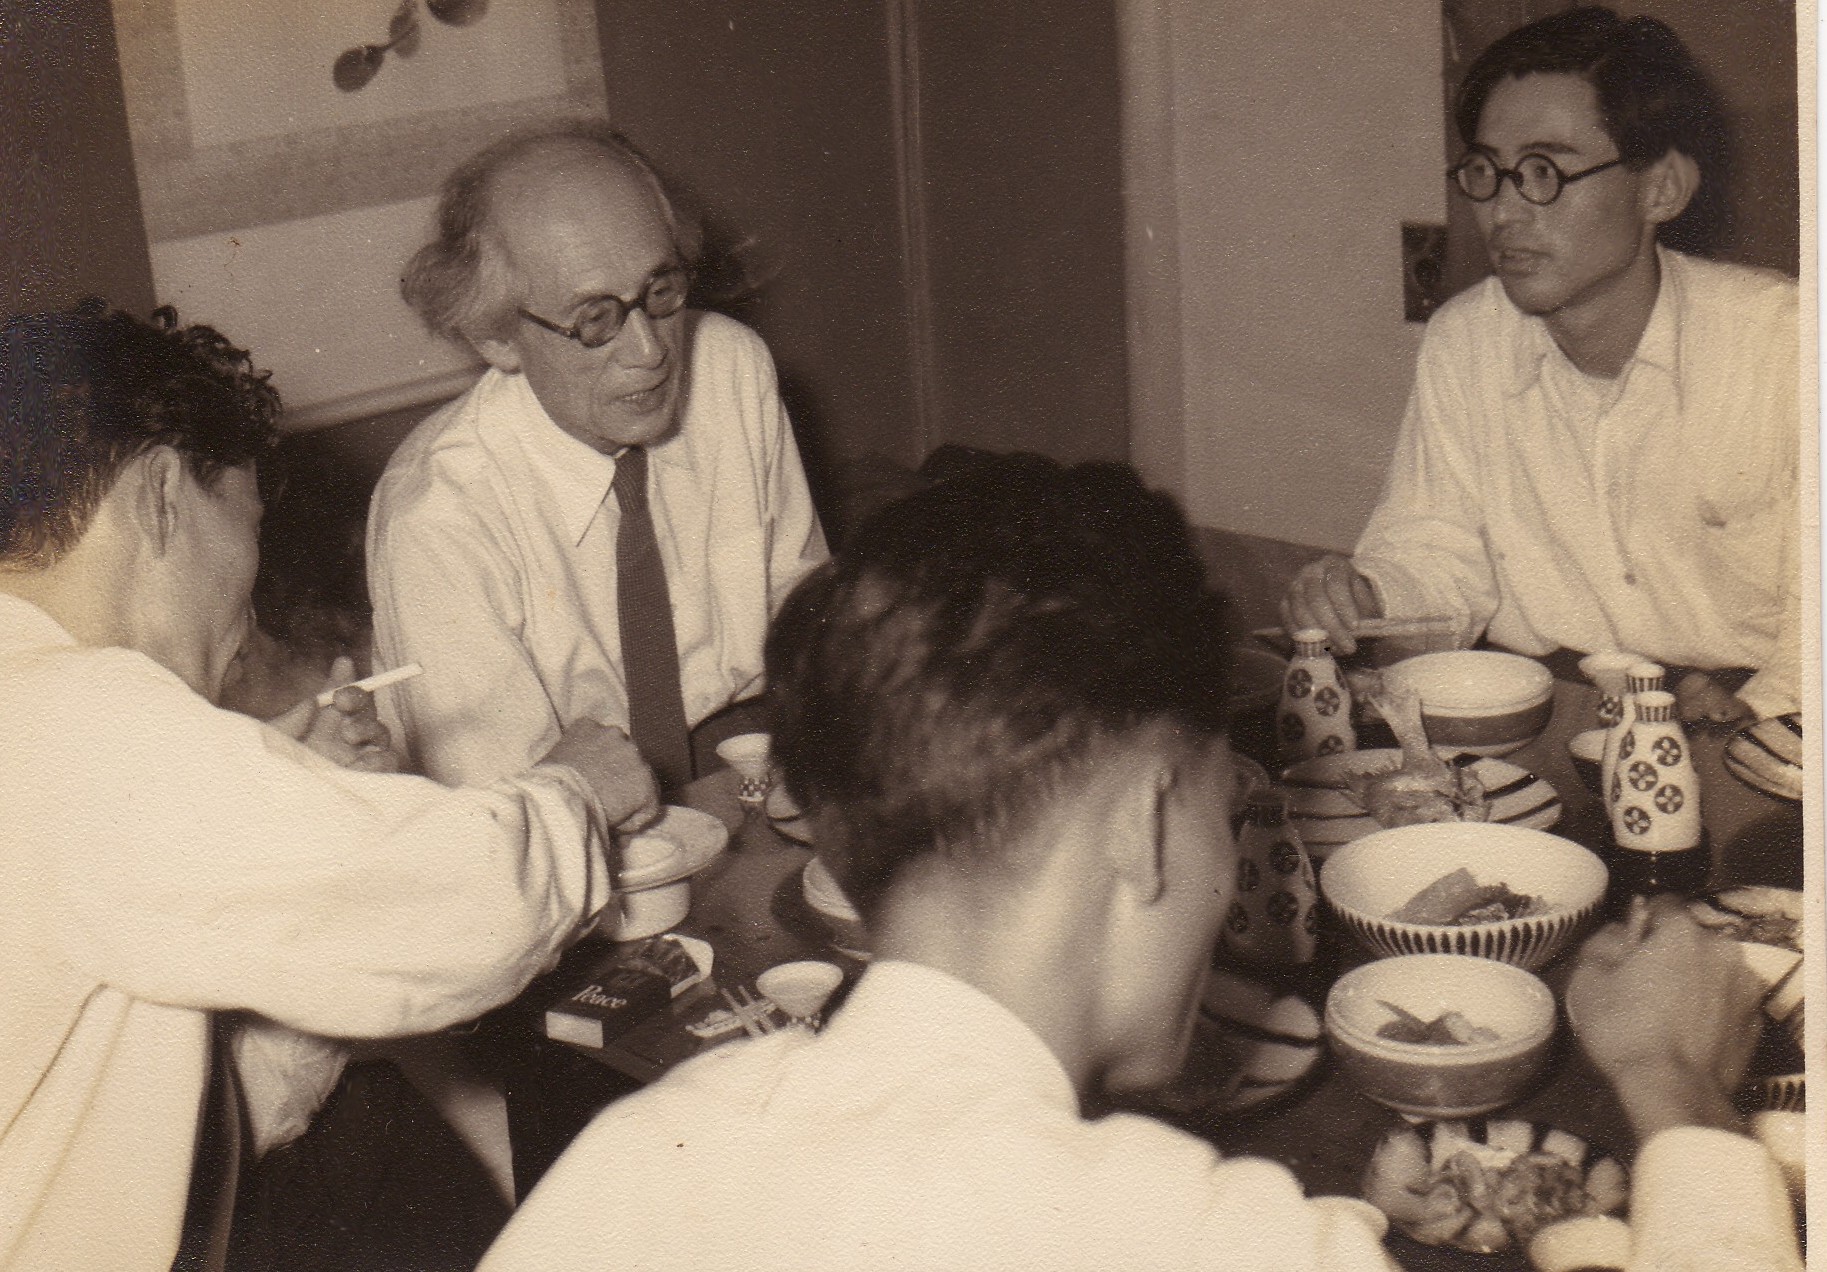 Kuruma and others at a table, eating